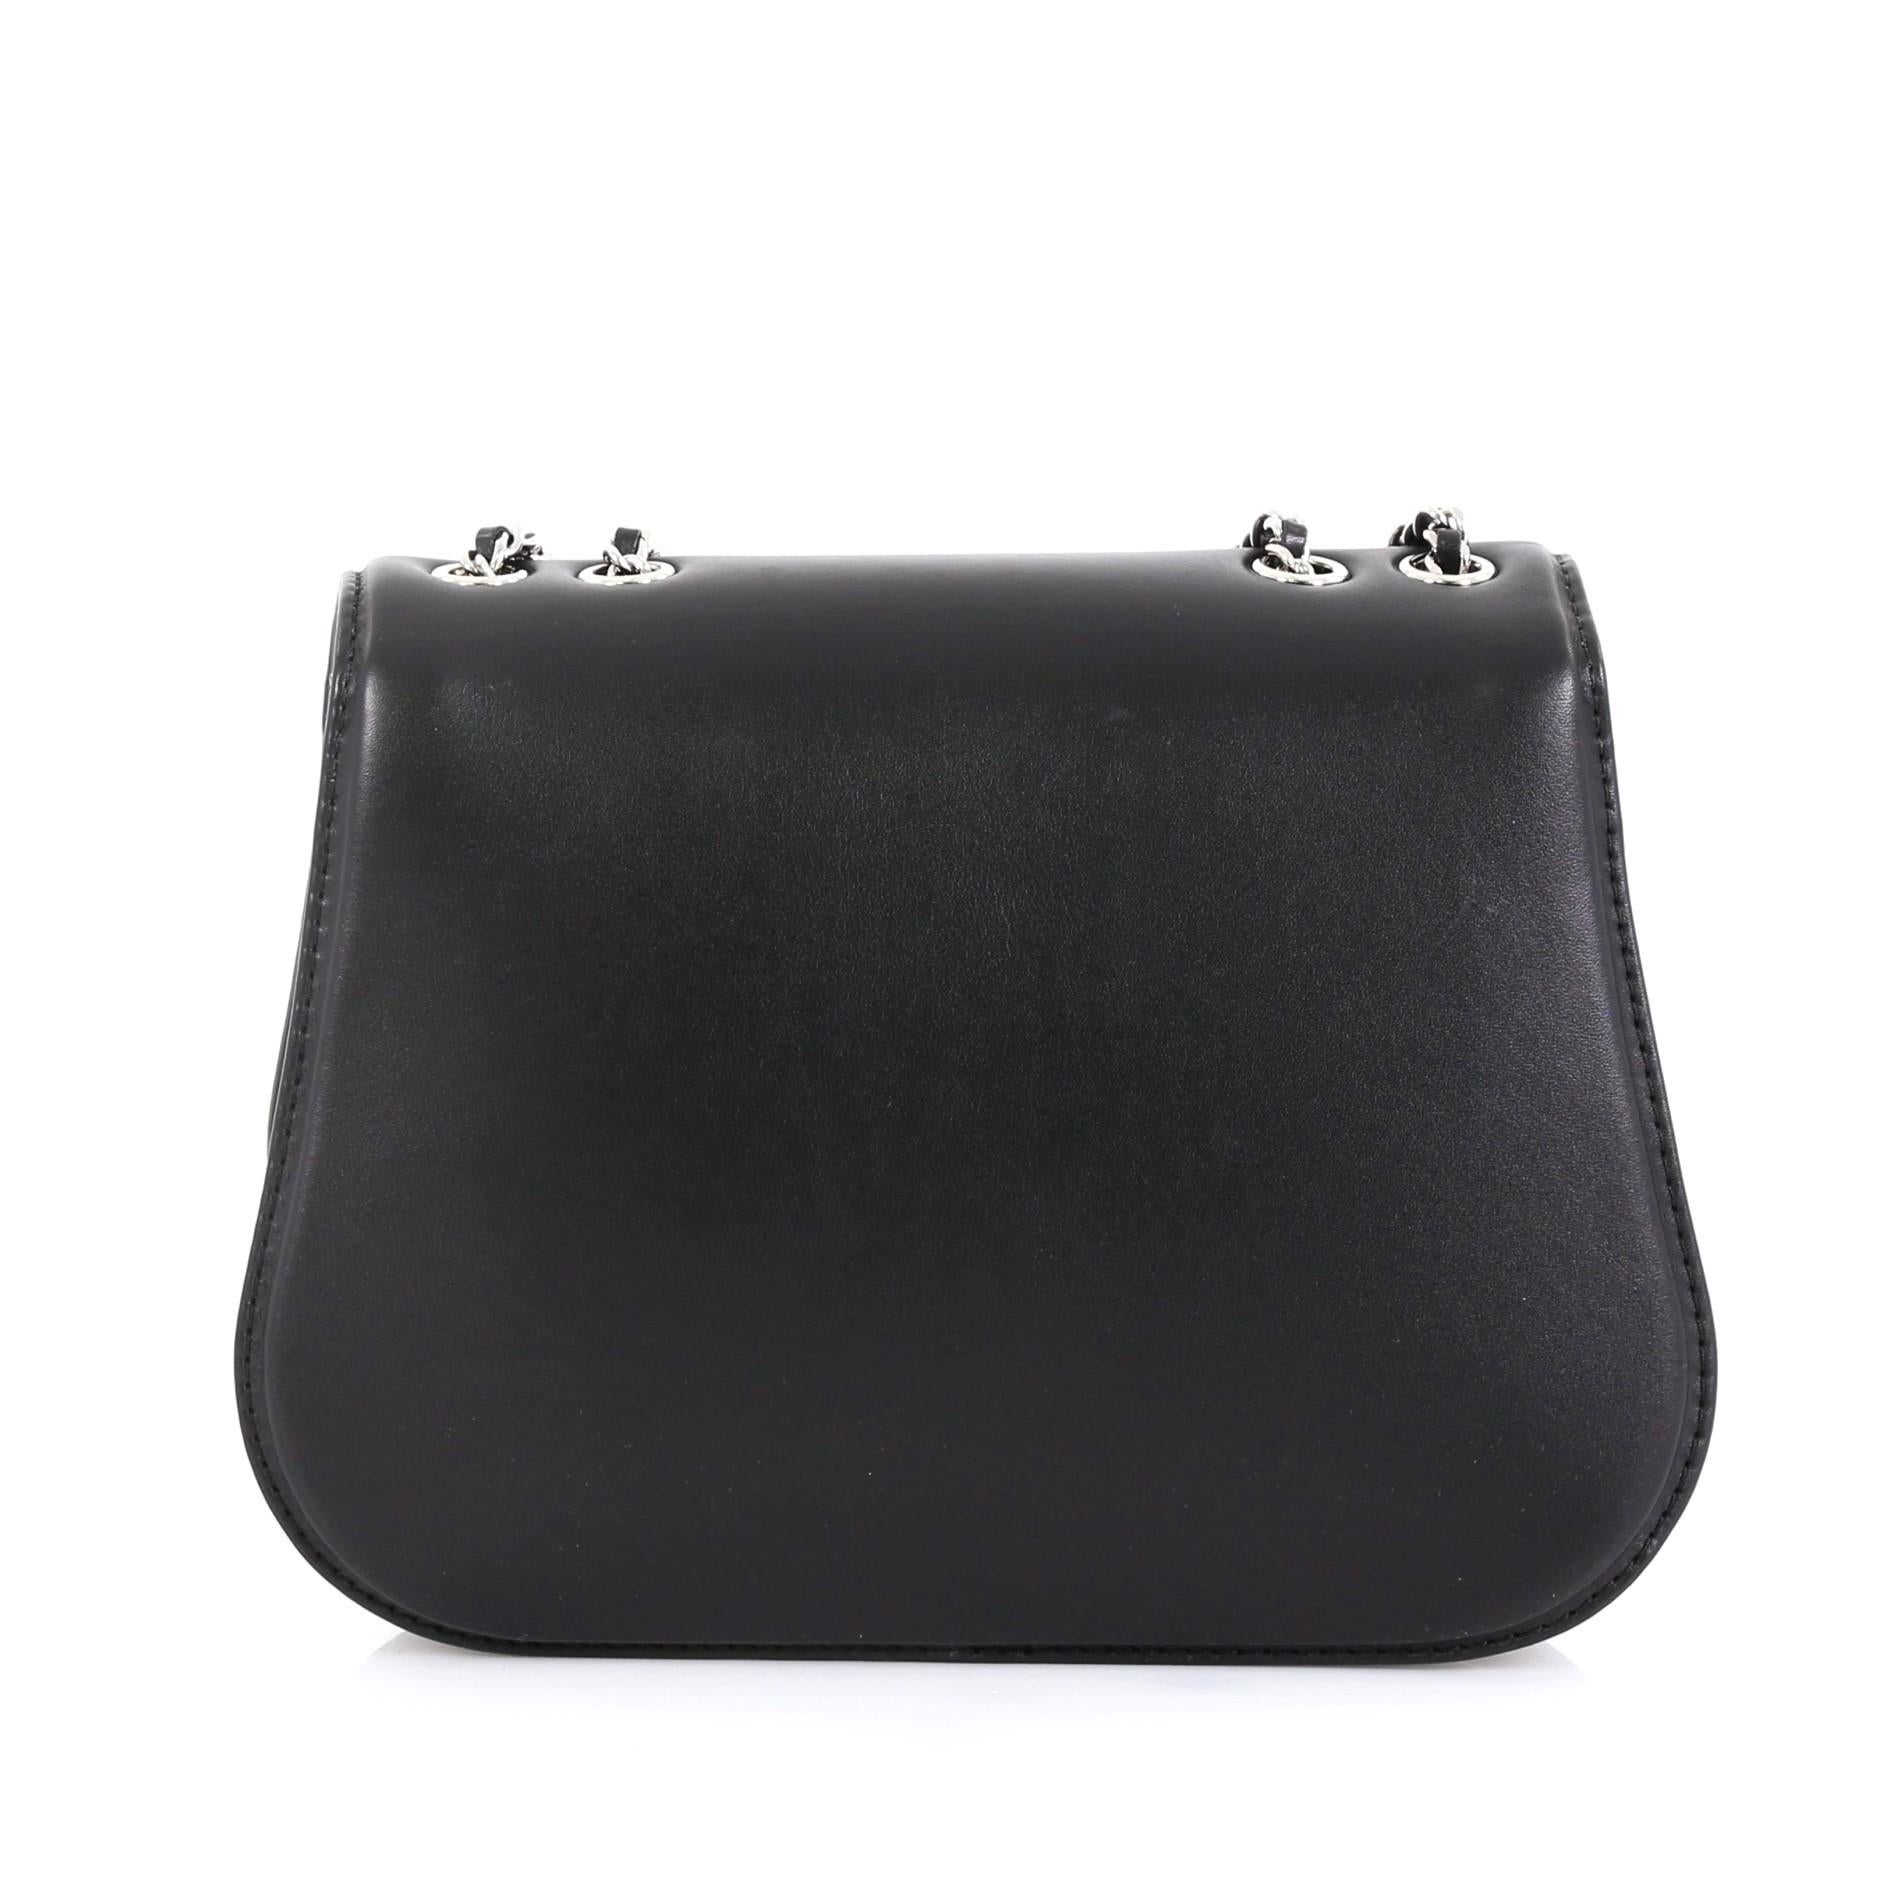 Black Chanel Braided Chic Flap Bag Calfskin Small